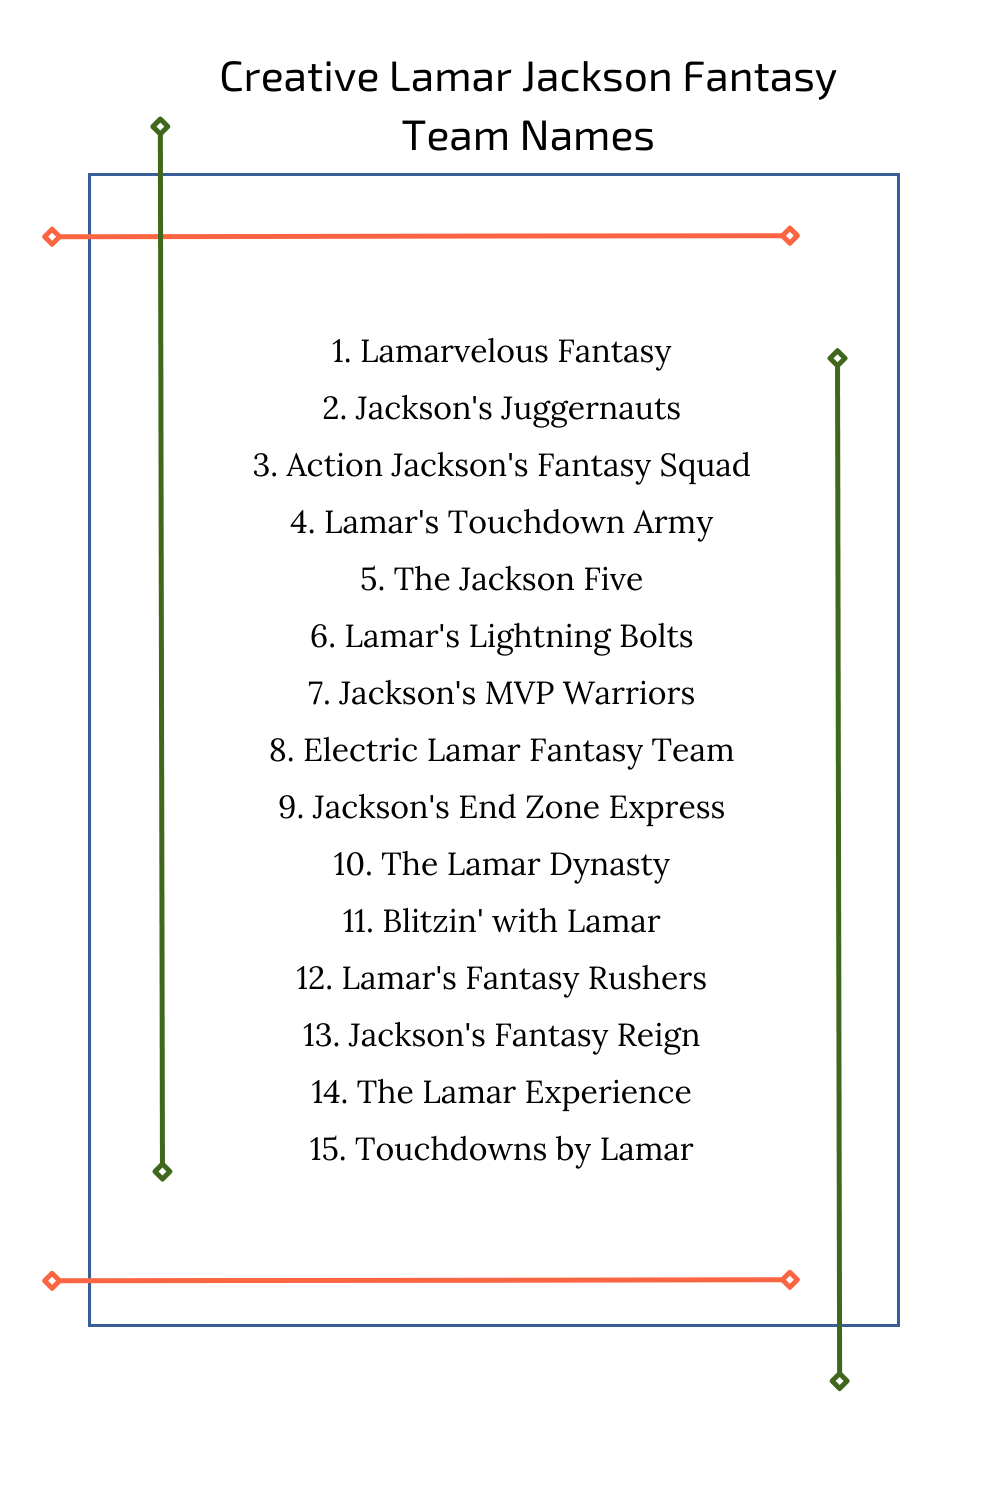 Creative Lamar Jackson Fantasy Team Names